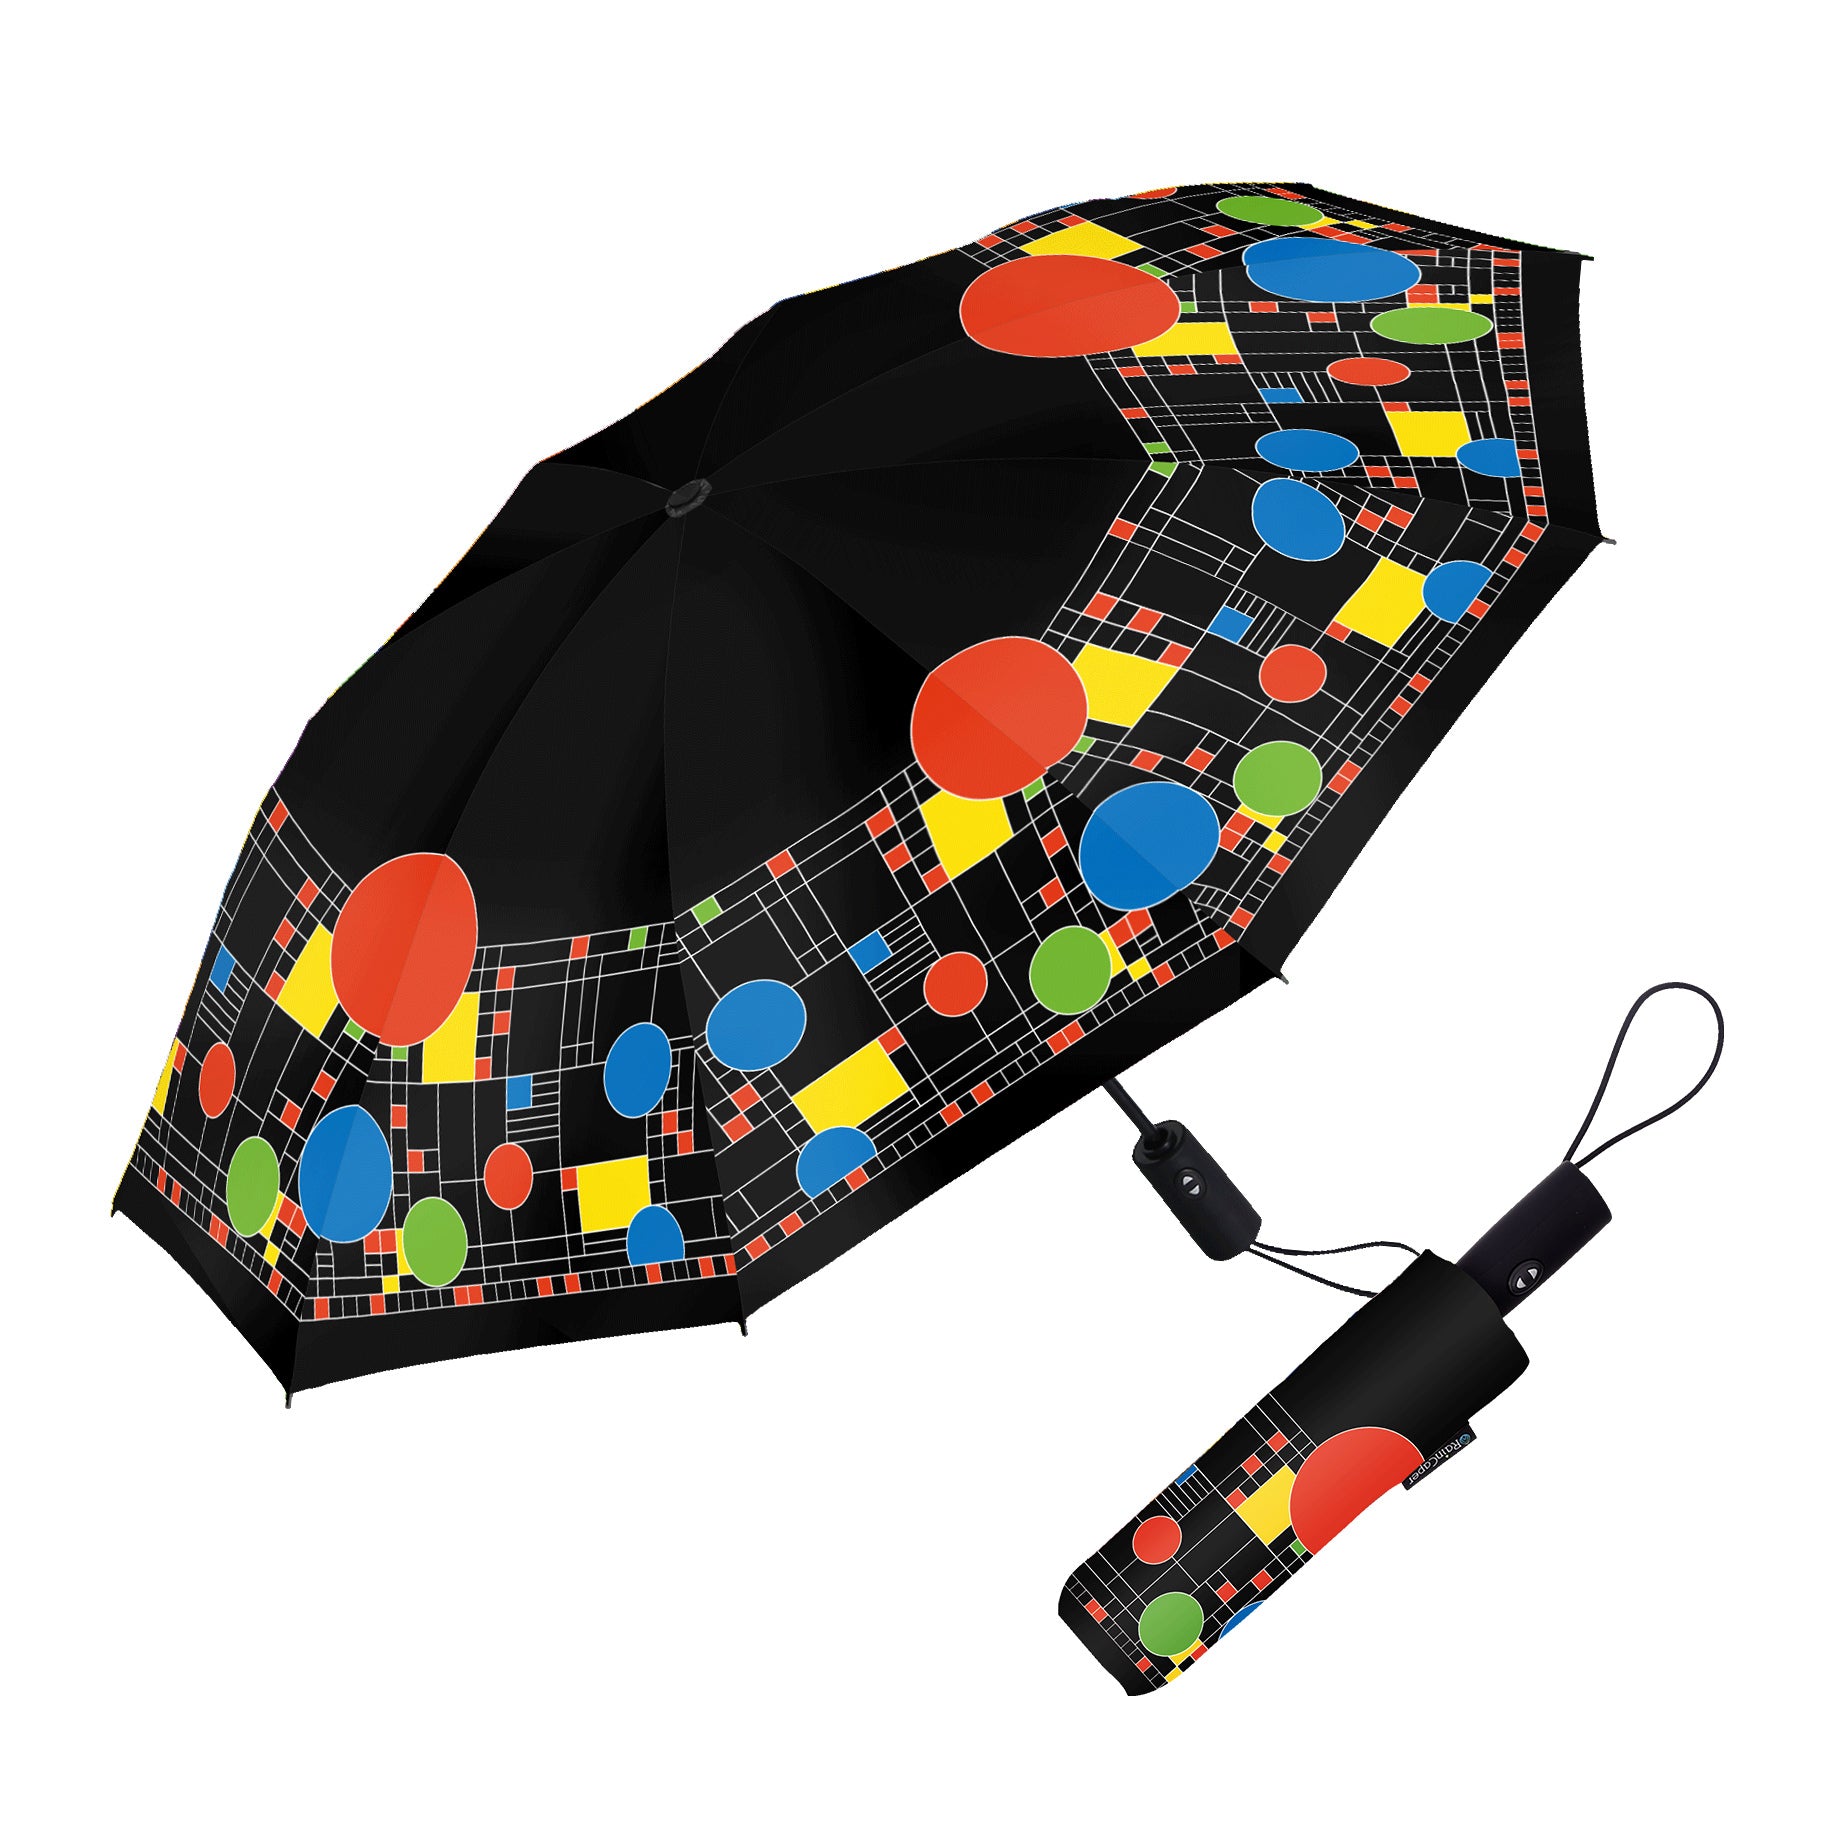 Frank Lloyd Wright Coonley Playhouse Folding Travel Umbrella